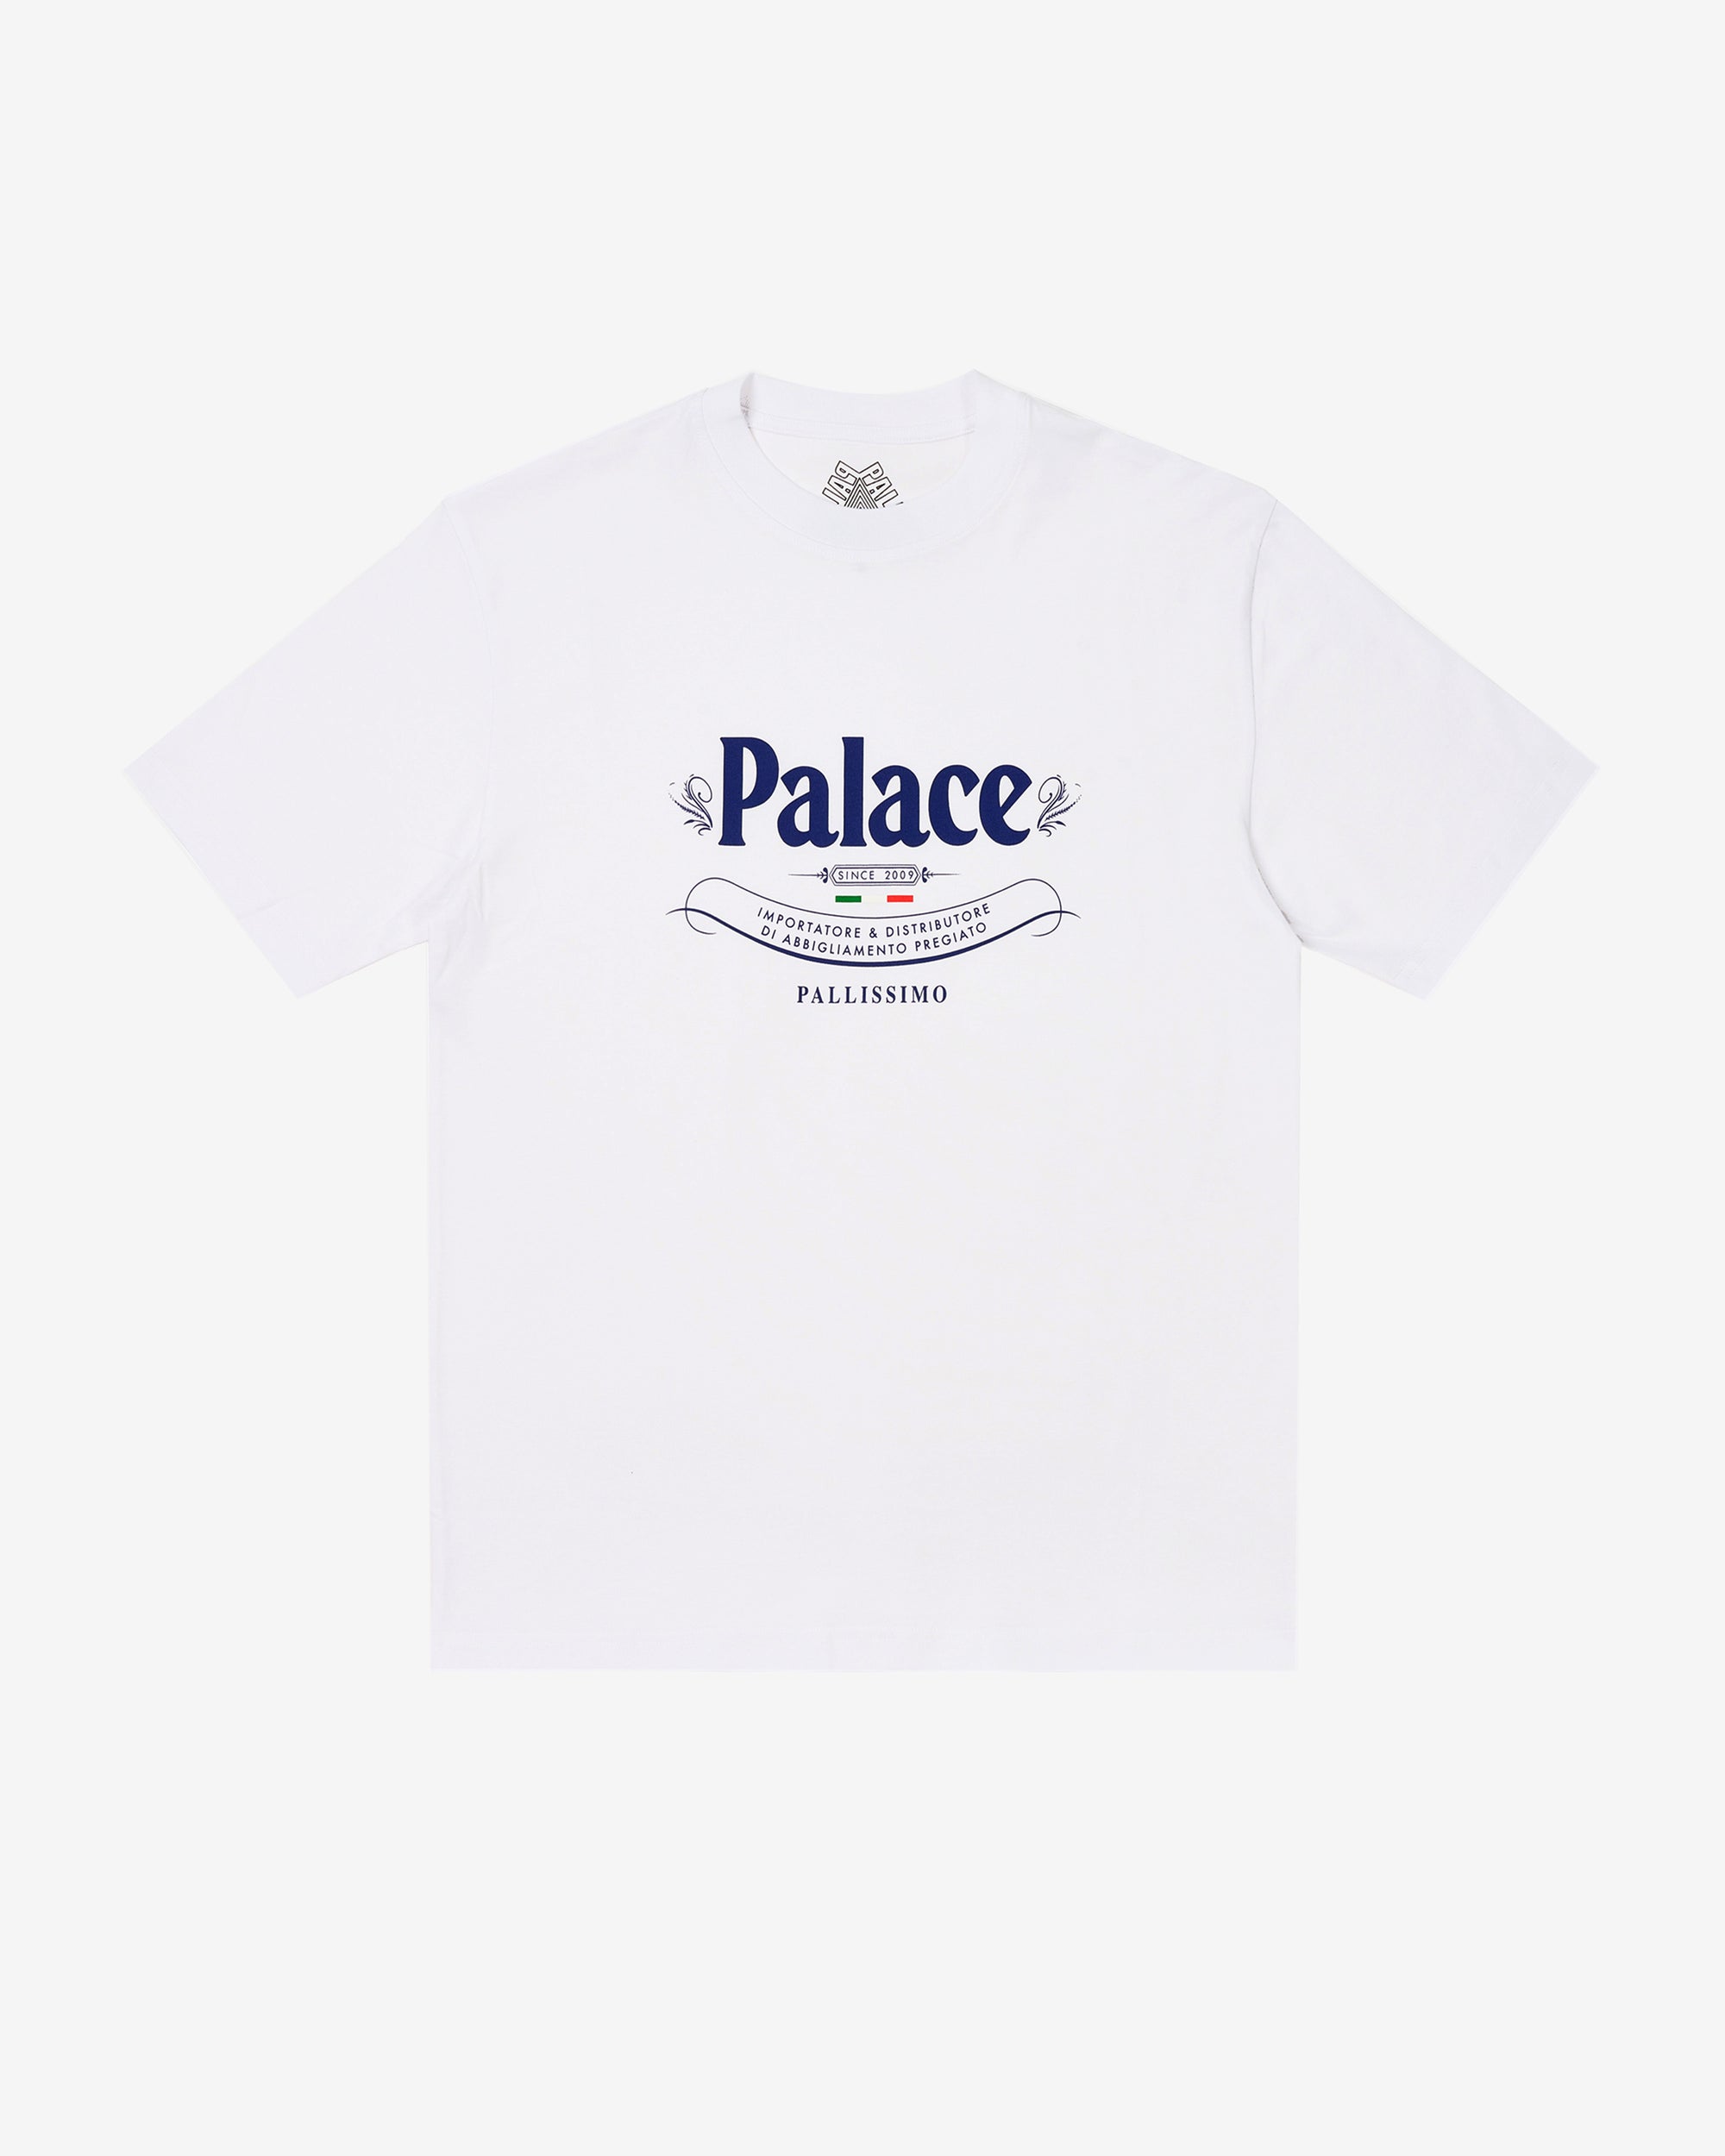 Palace - Men's Pallissimo T-Shirt - (White) view 1